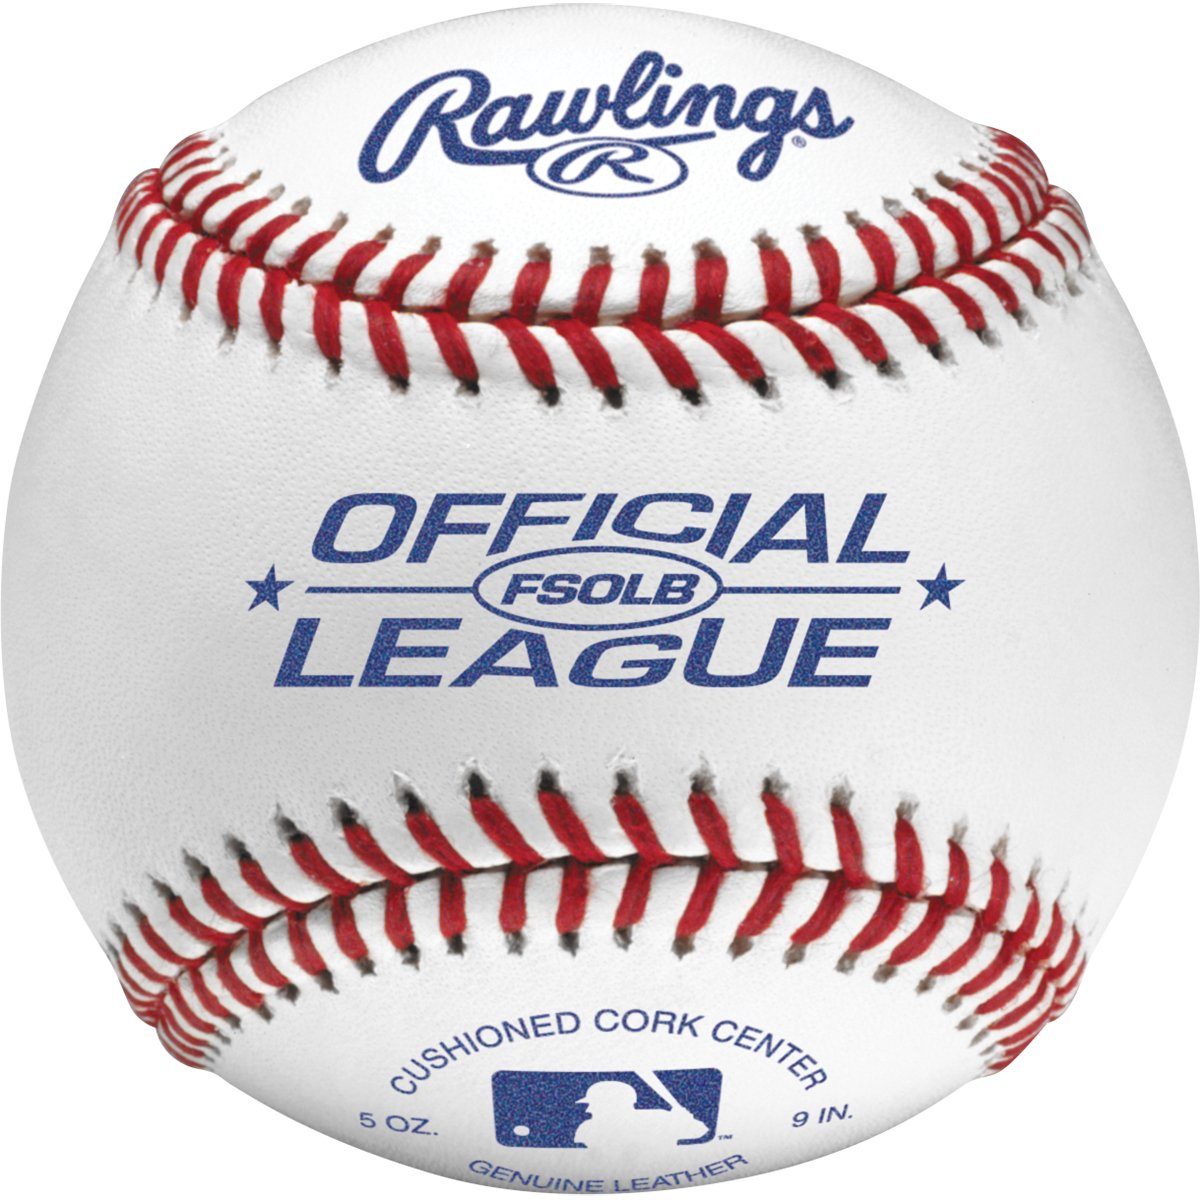 Rawlings Fsolb Official League Baseballs - Dozen